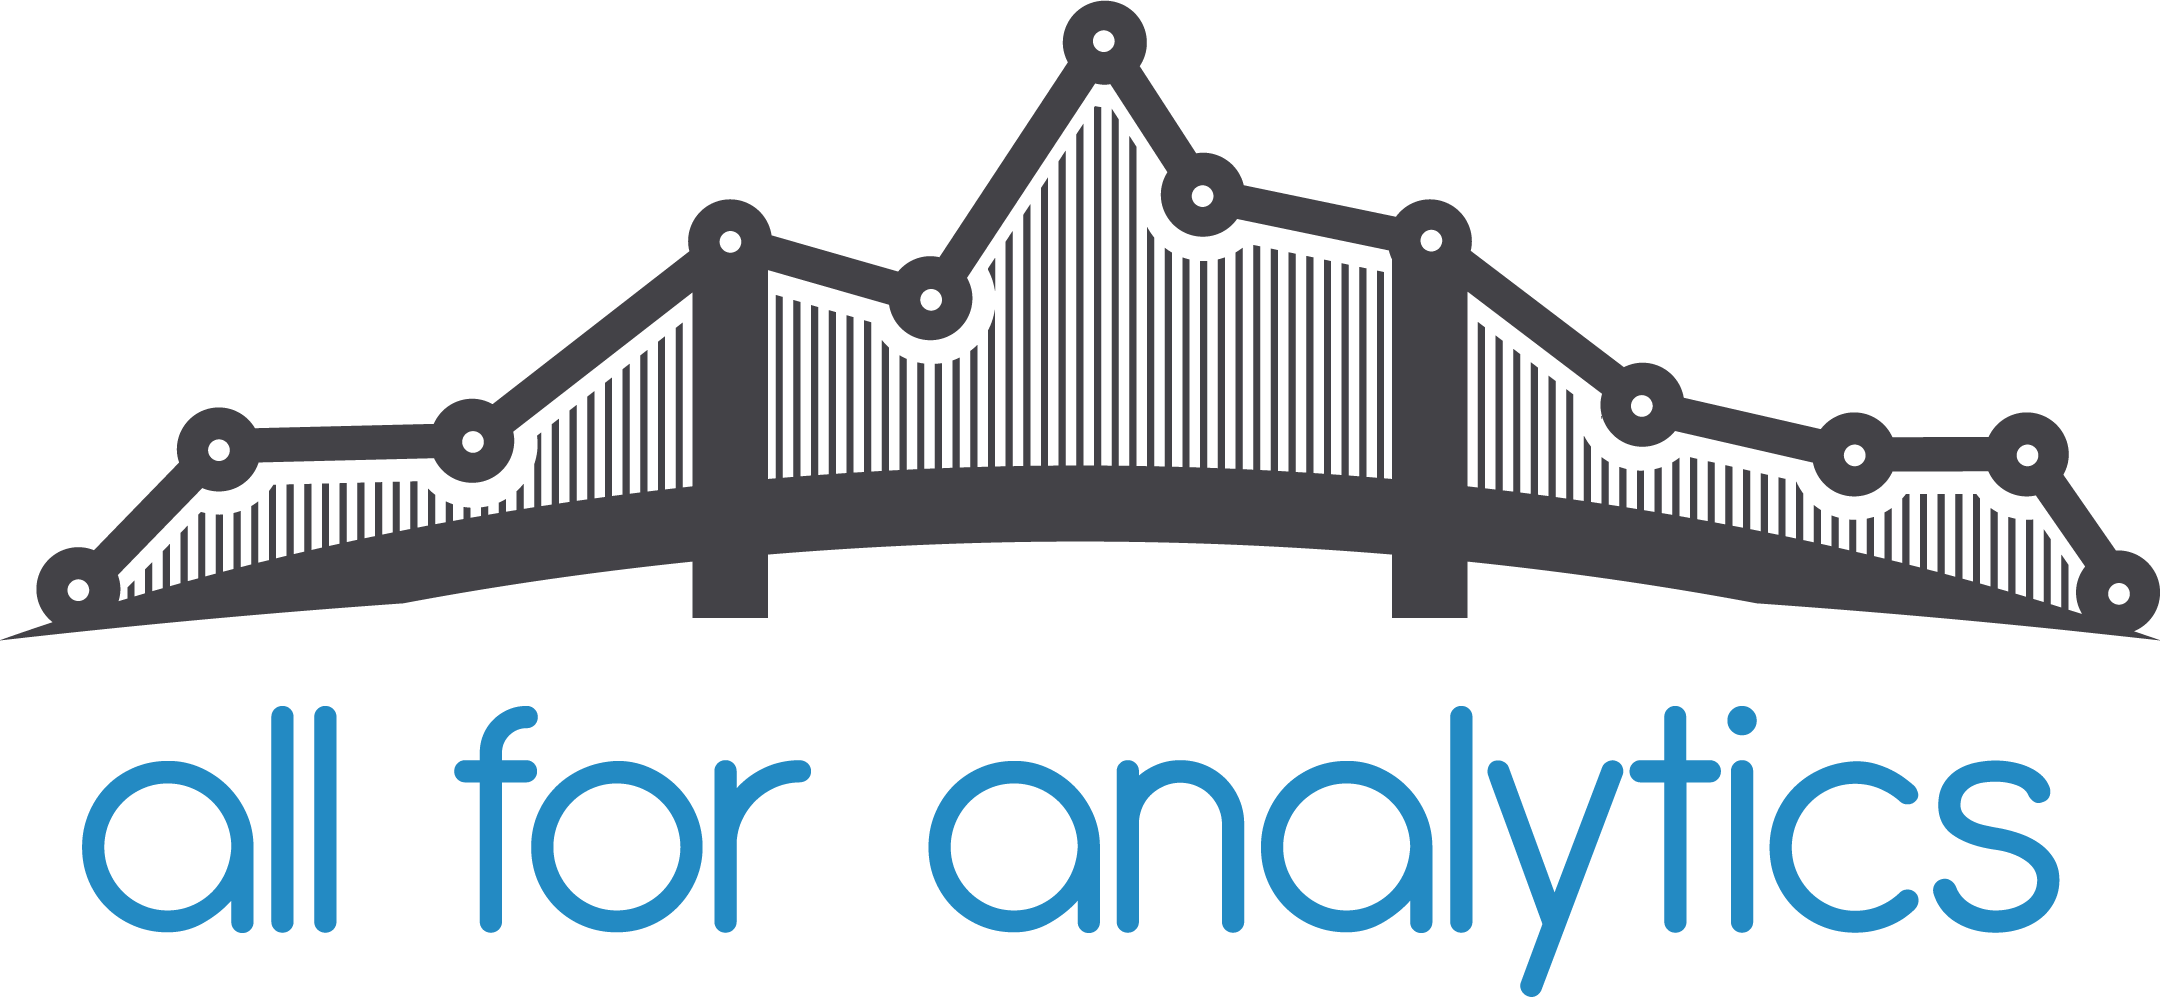 all-for-analytics-logo-curvas